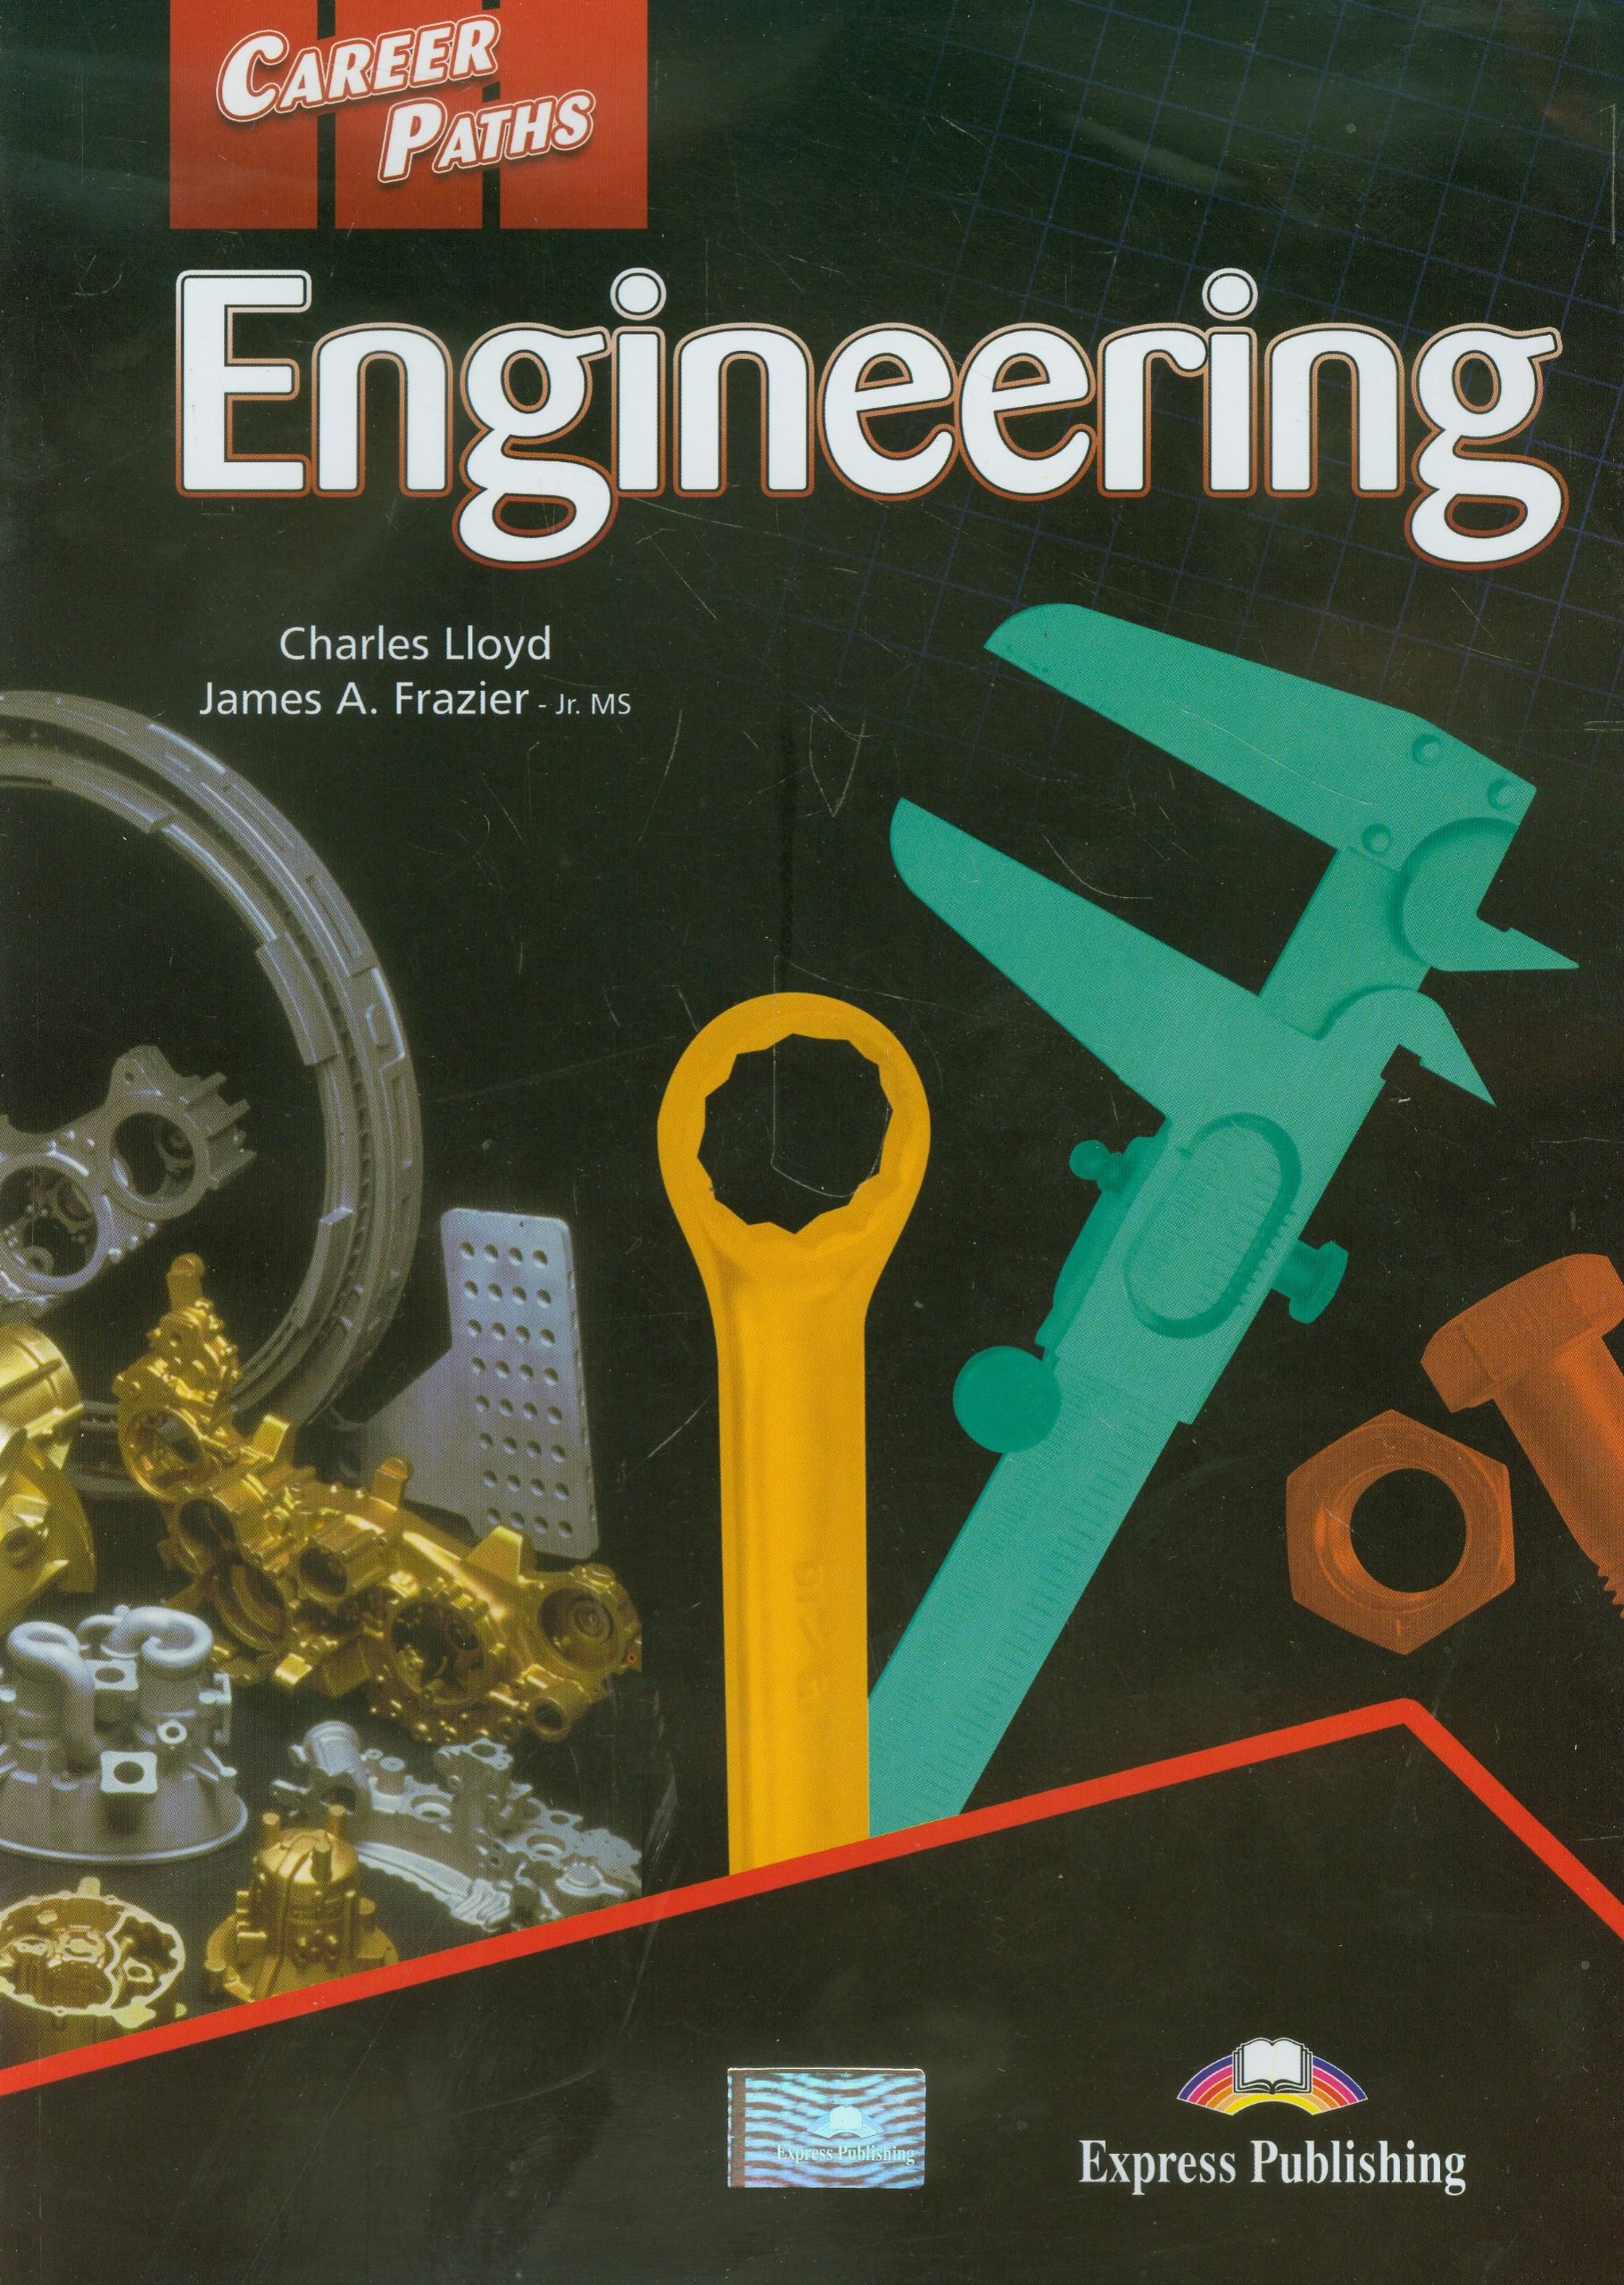 ENGINEERING (CAREER PATHS) Student's Book